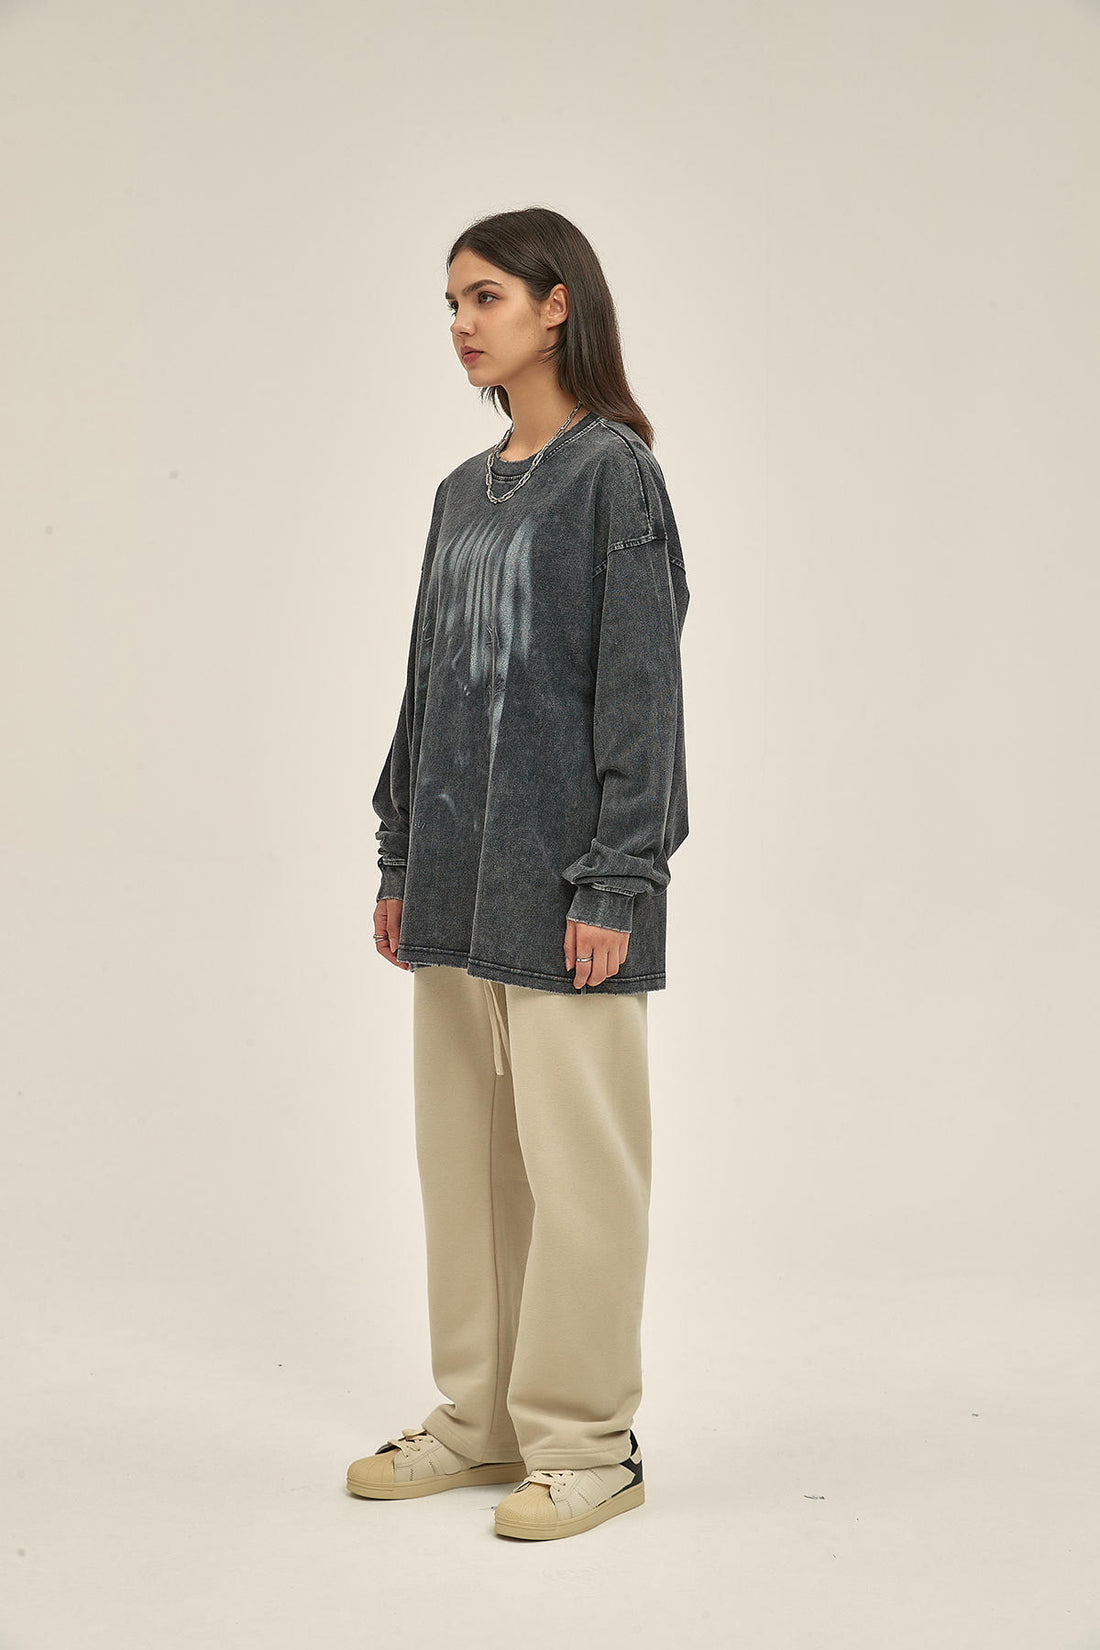 250G Washed Silhouette Print Women Long-Sleeved Sweatshirt